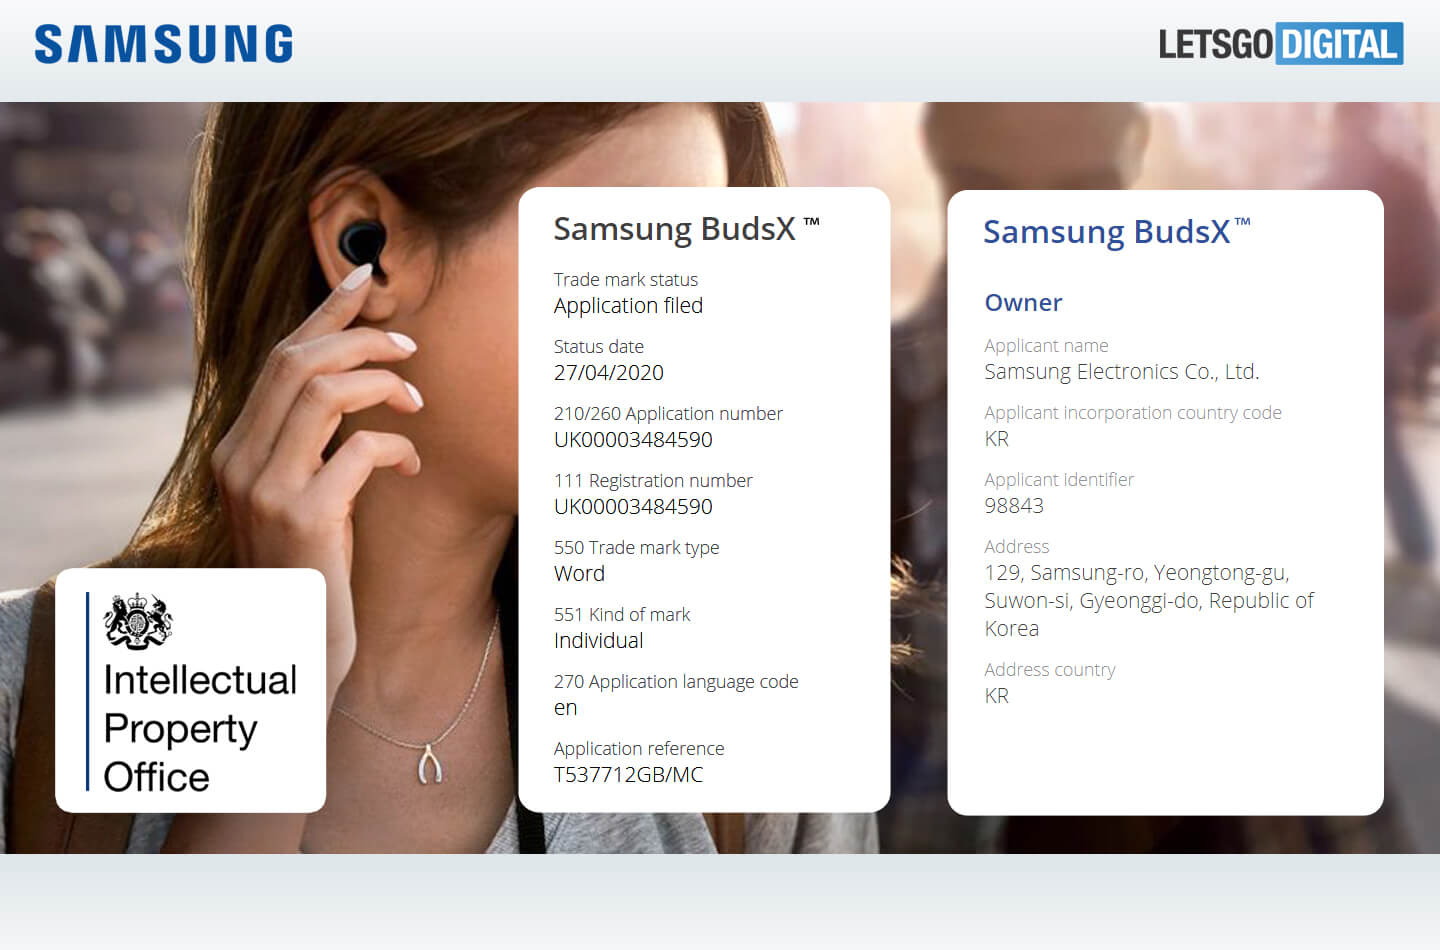 Samsung BudsX